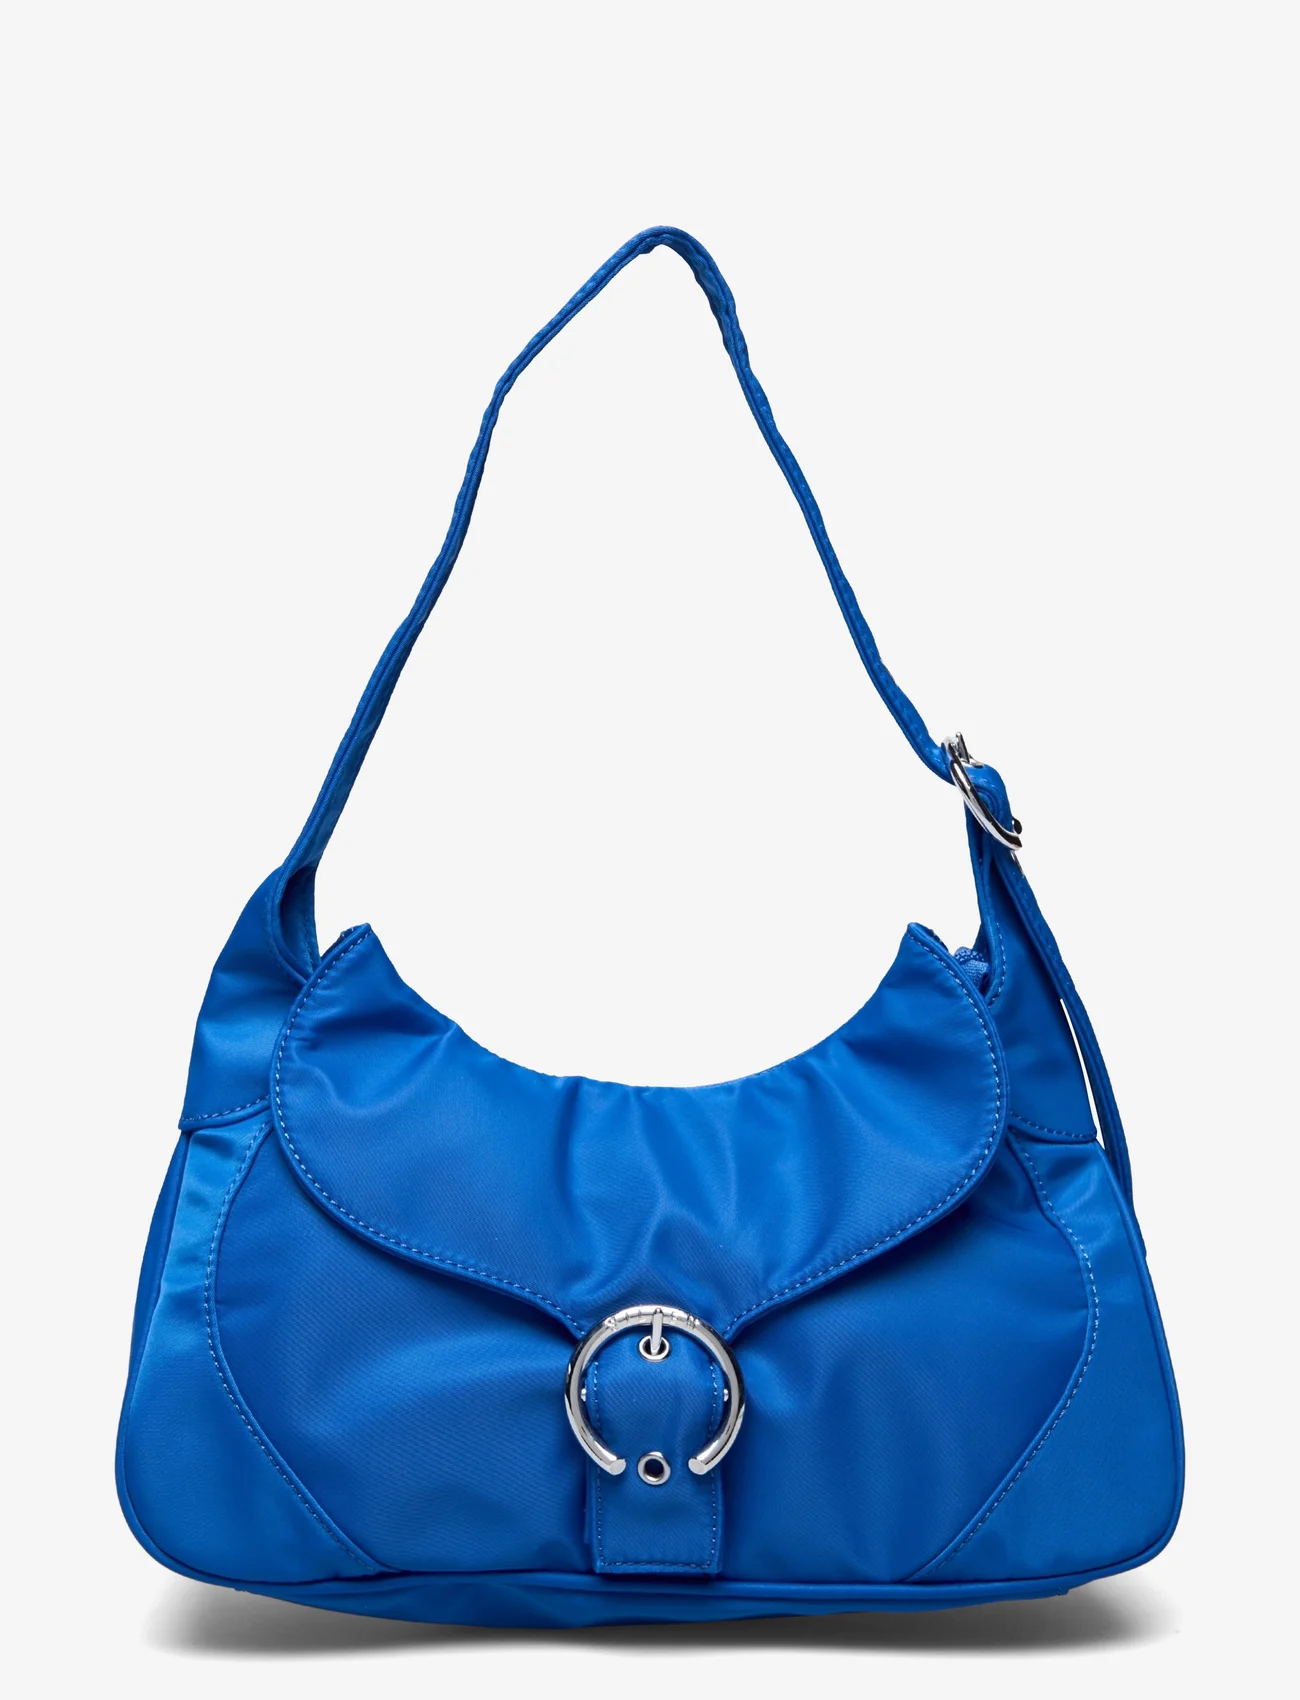 Silfen - Thea - Buckle Shoulder Bag - feestelijke kleding voor outlet-prijzen - royal blue - 0